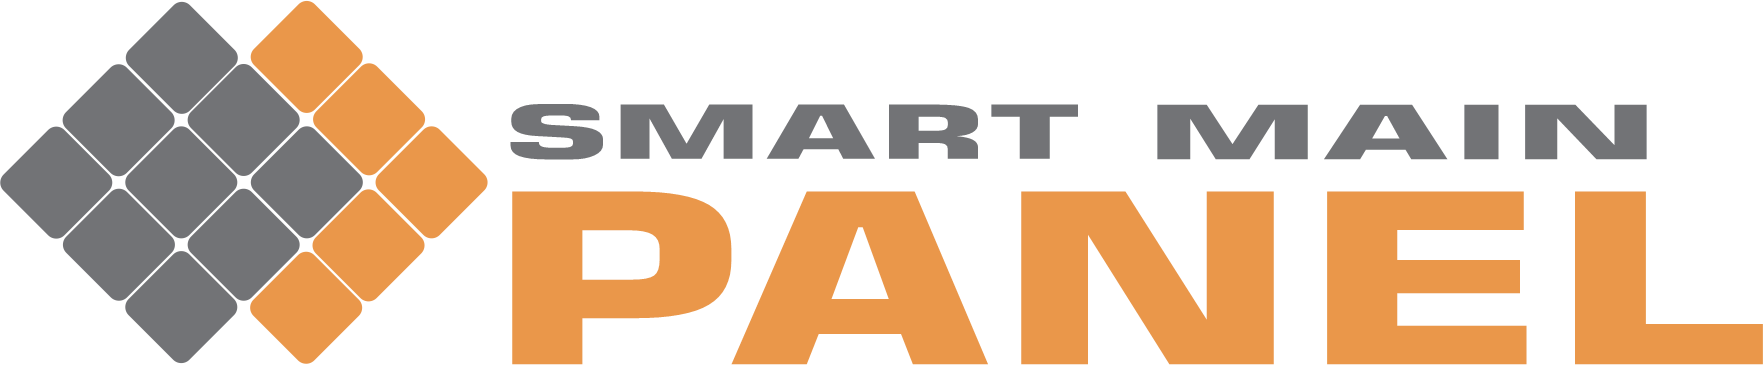 Smart Main Panel Logo